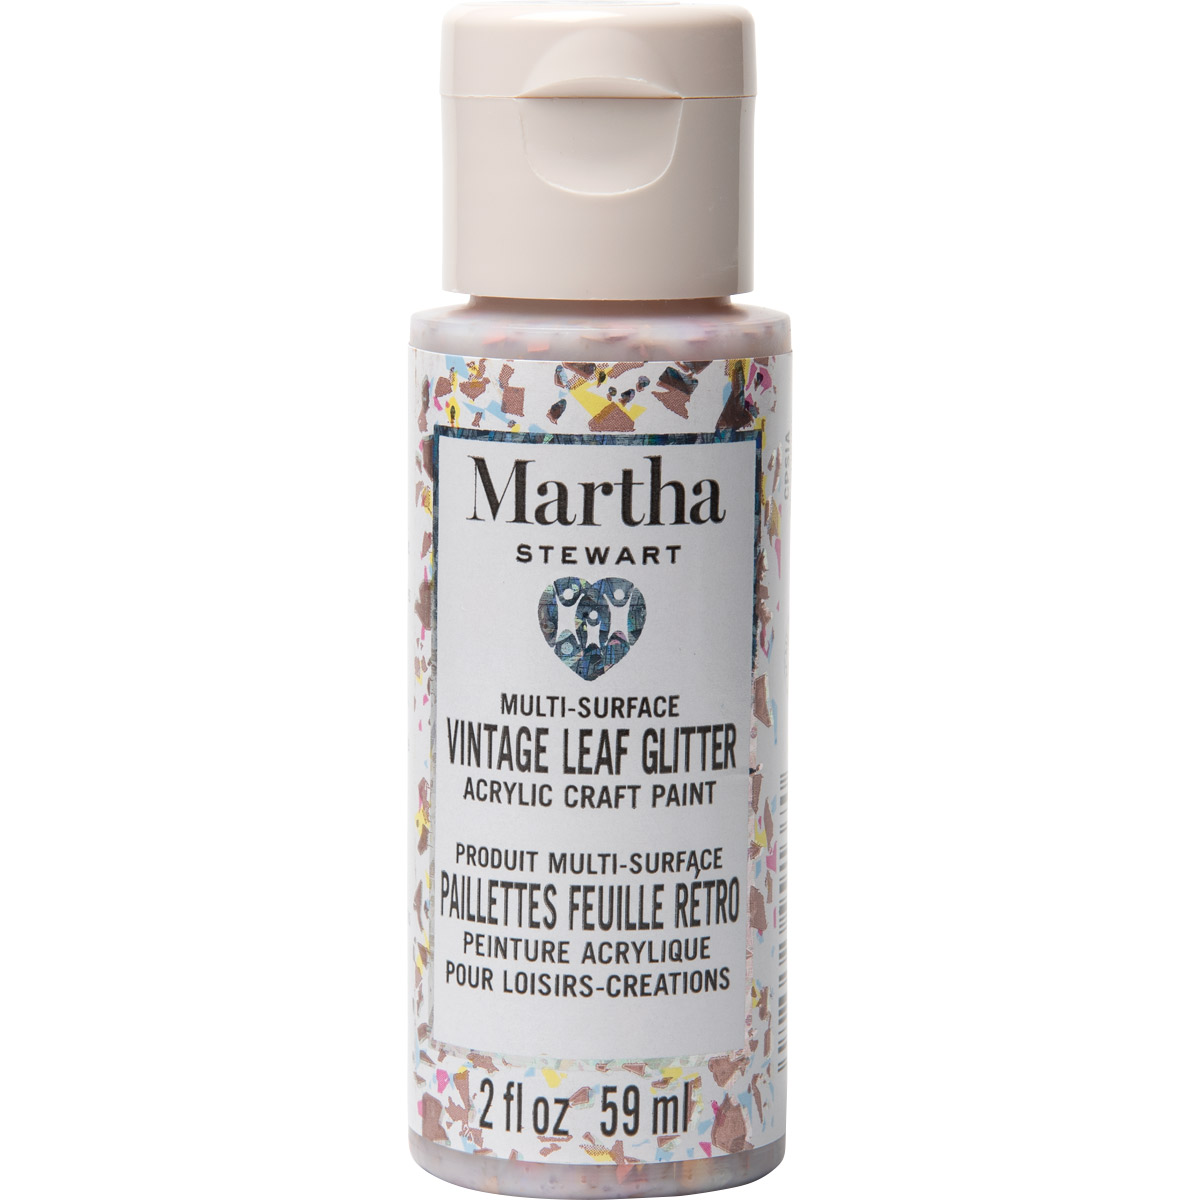 Martha Stewart ® Multi-Surface Vintage Leaf Glitter Acrylic Craft Paint CPSIA - Cotton Candy, 2 oz. 